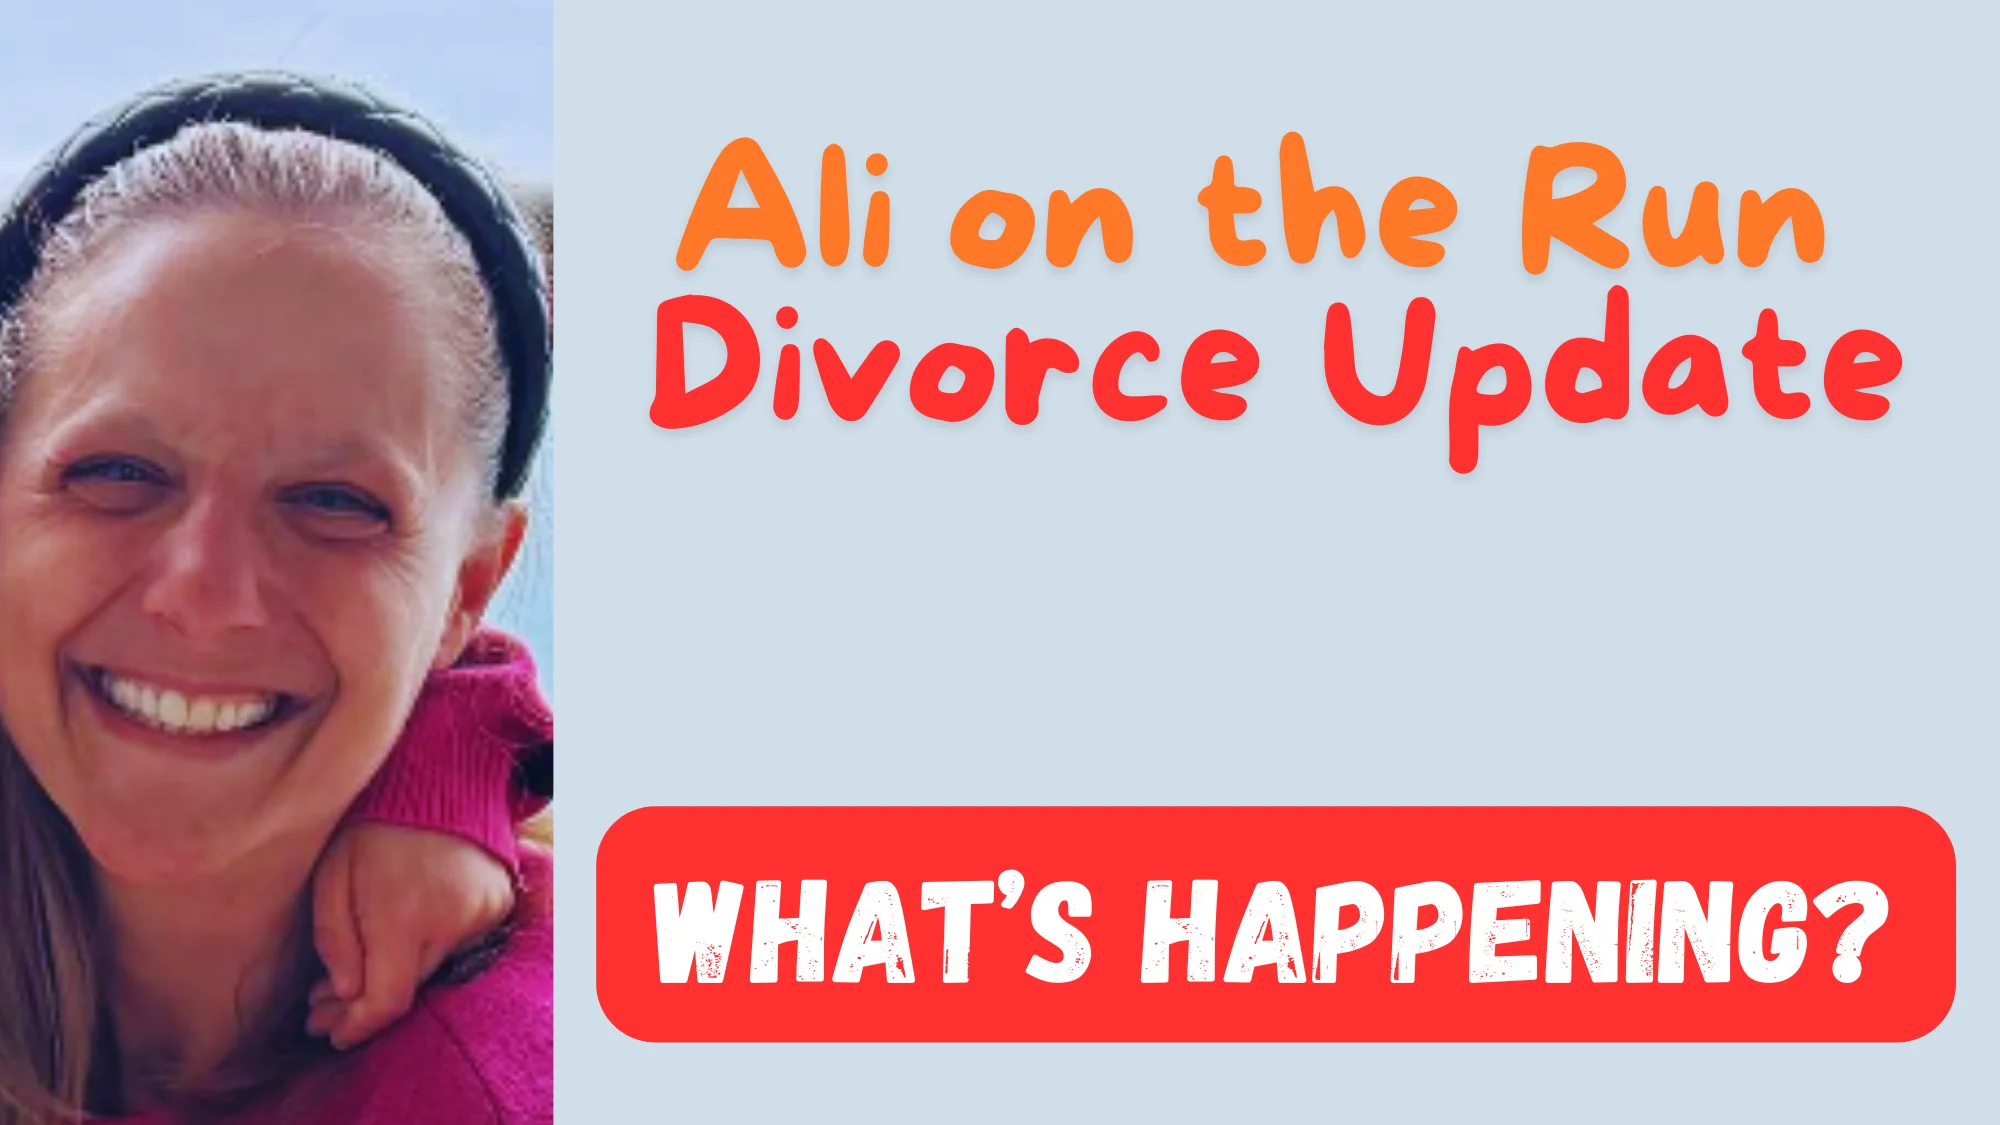 Ali on the Run Divorce Update